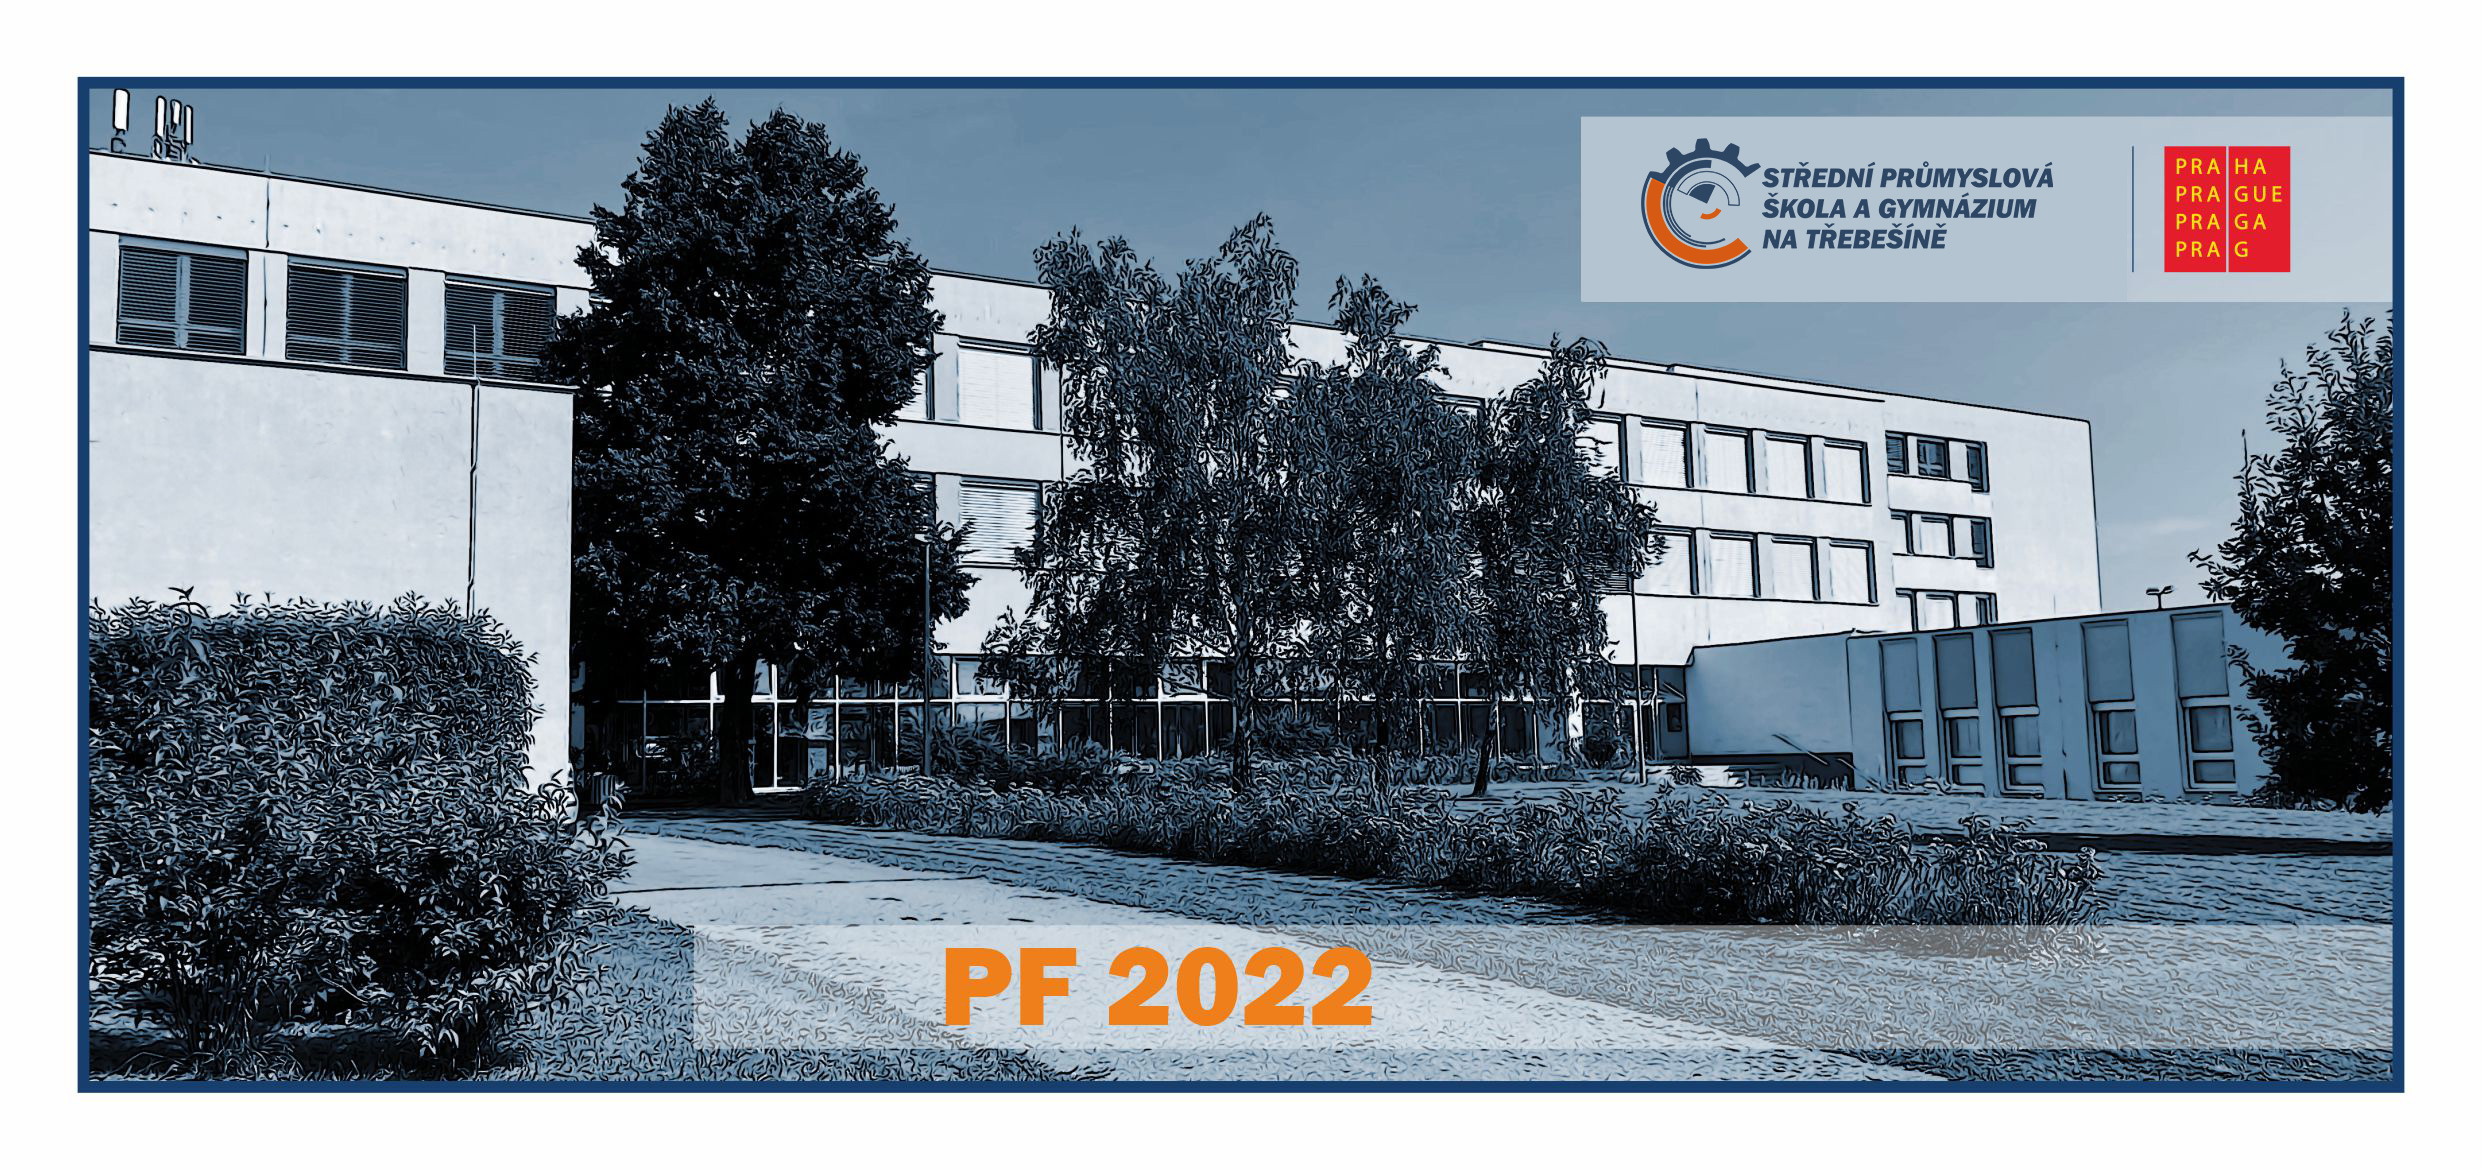 PF 2022 Prumyslovka a gymnazium Trebesin